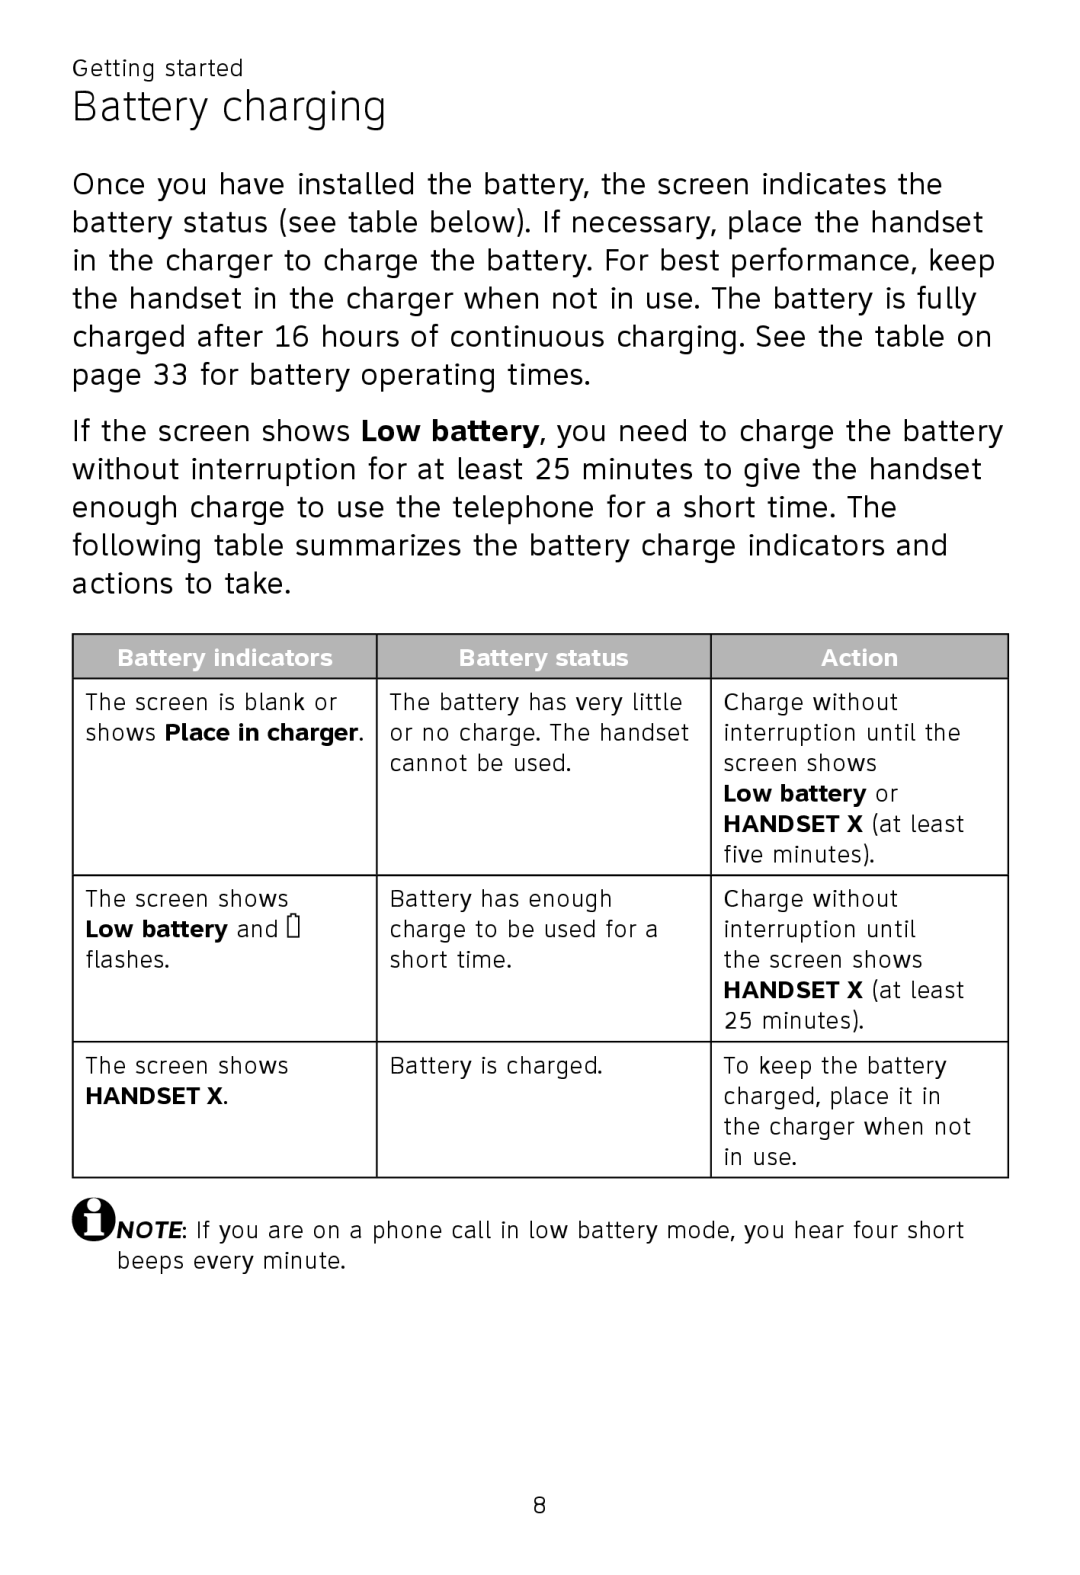 AT&T TL86109, TL86009, TL 86009 user manual Battery charging, Battery indicators, Battery status, Action 